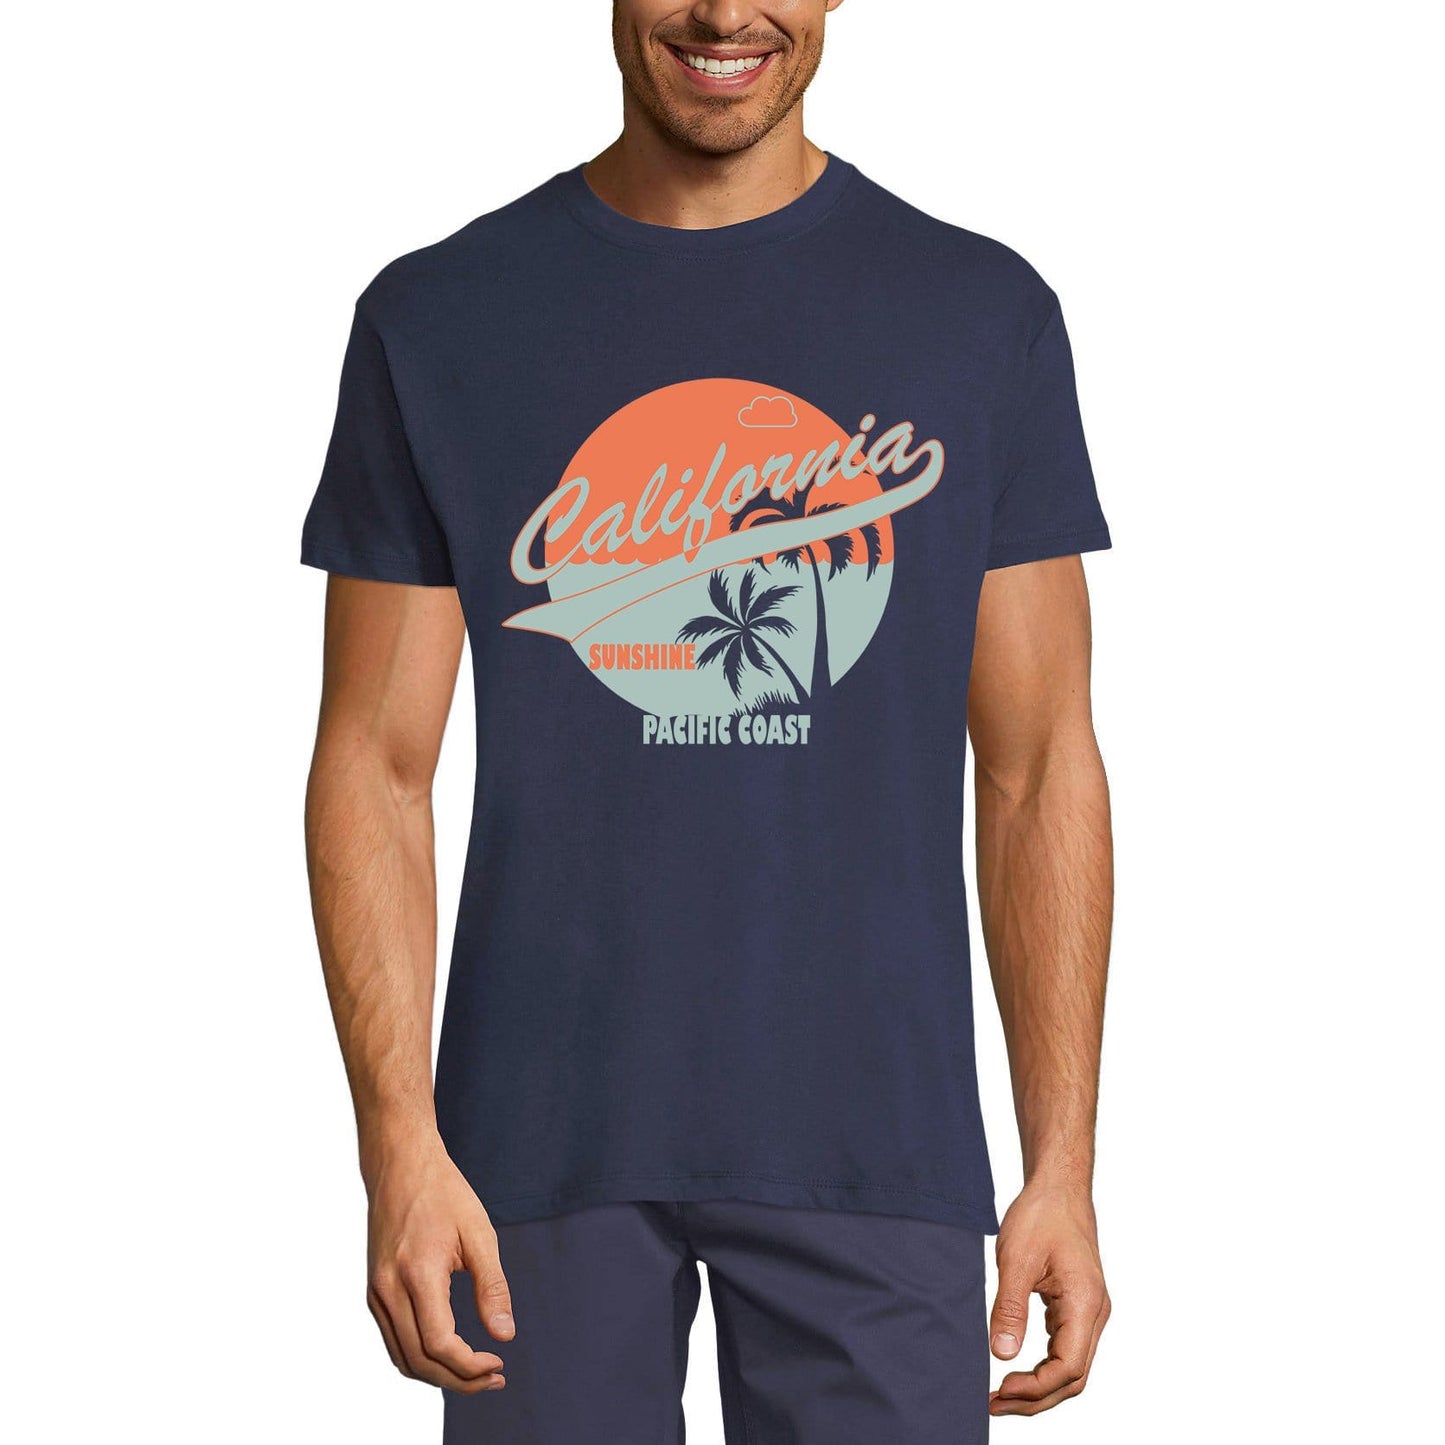 ULTRABASIC Men's Novelty T-Shirt California Sunshine Pacific Coast Tee Shirt